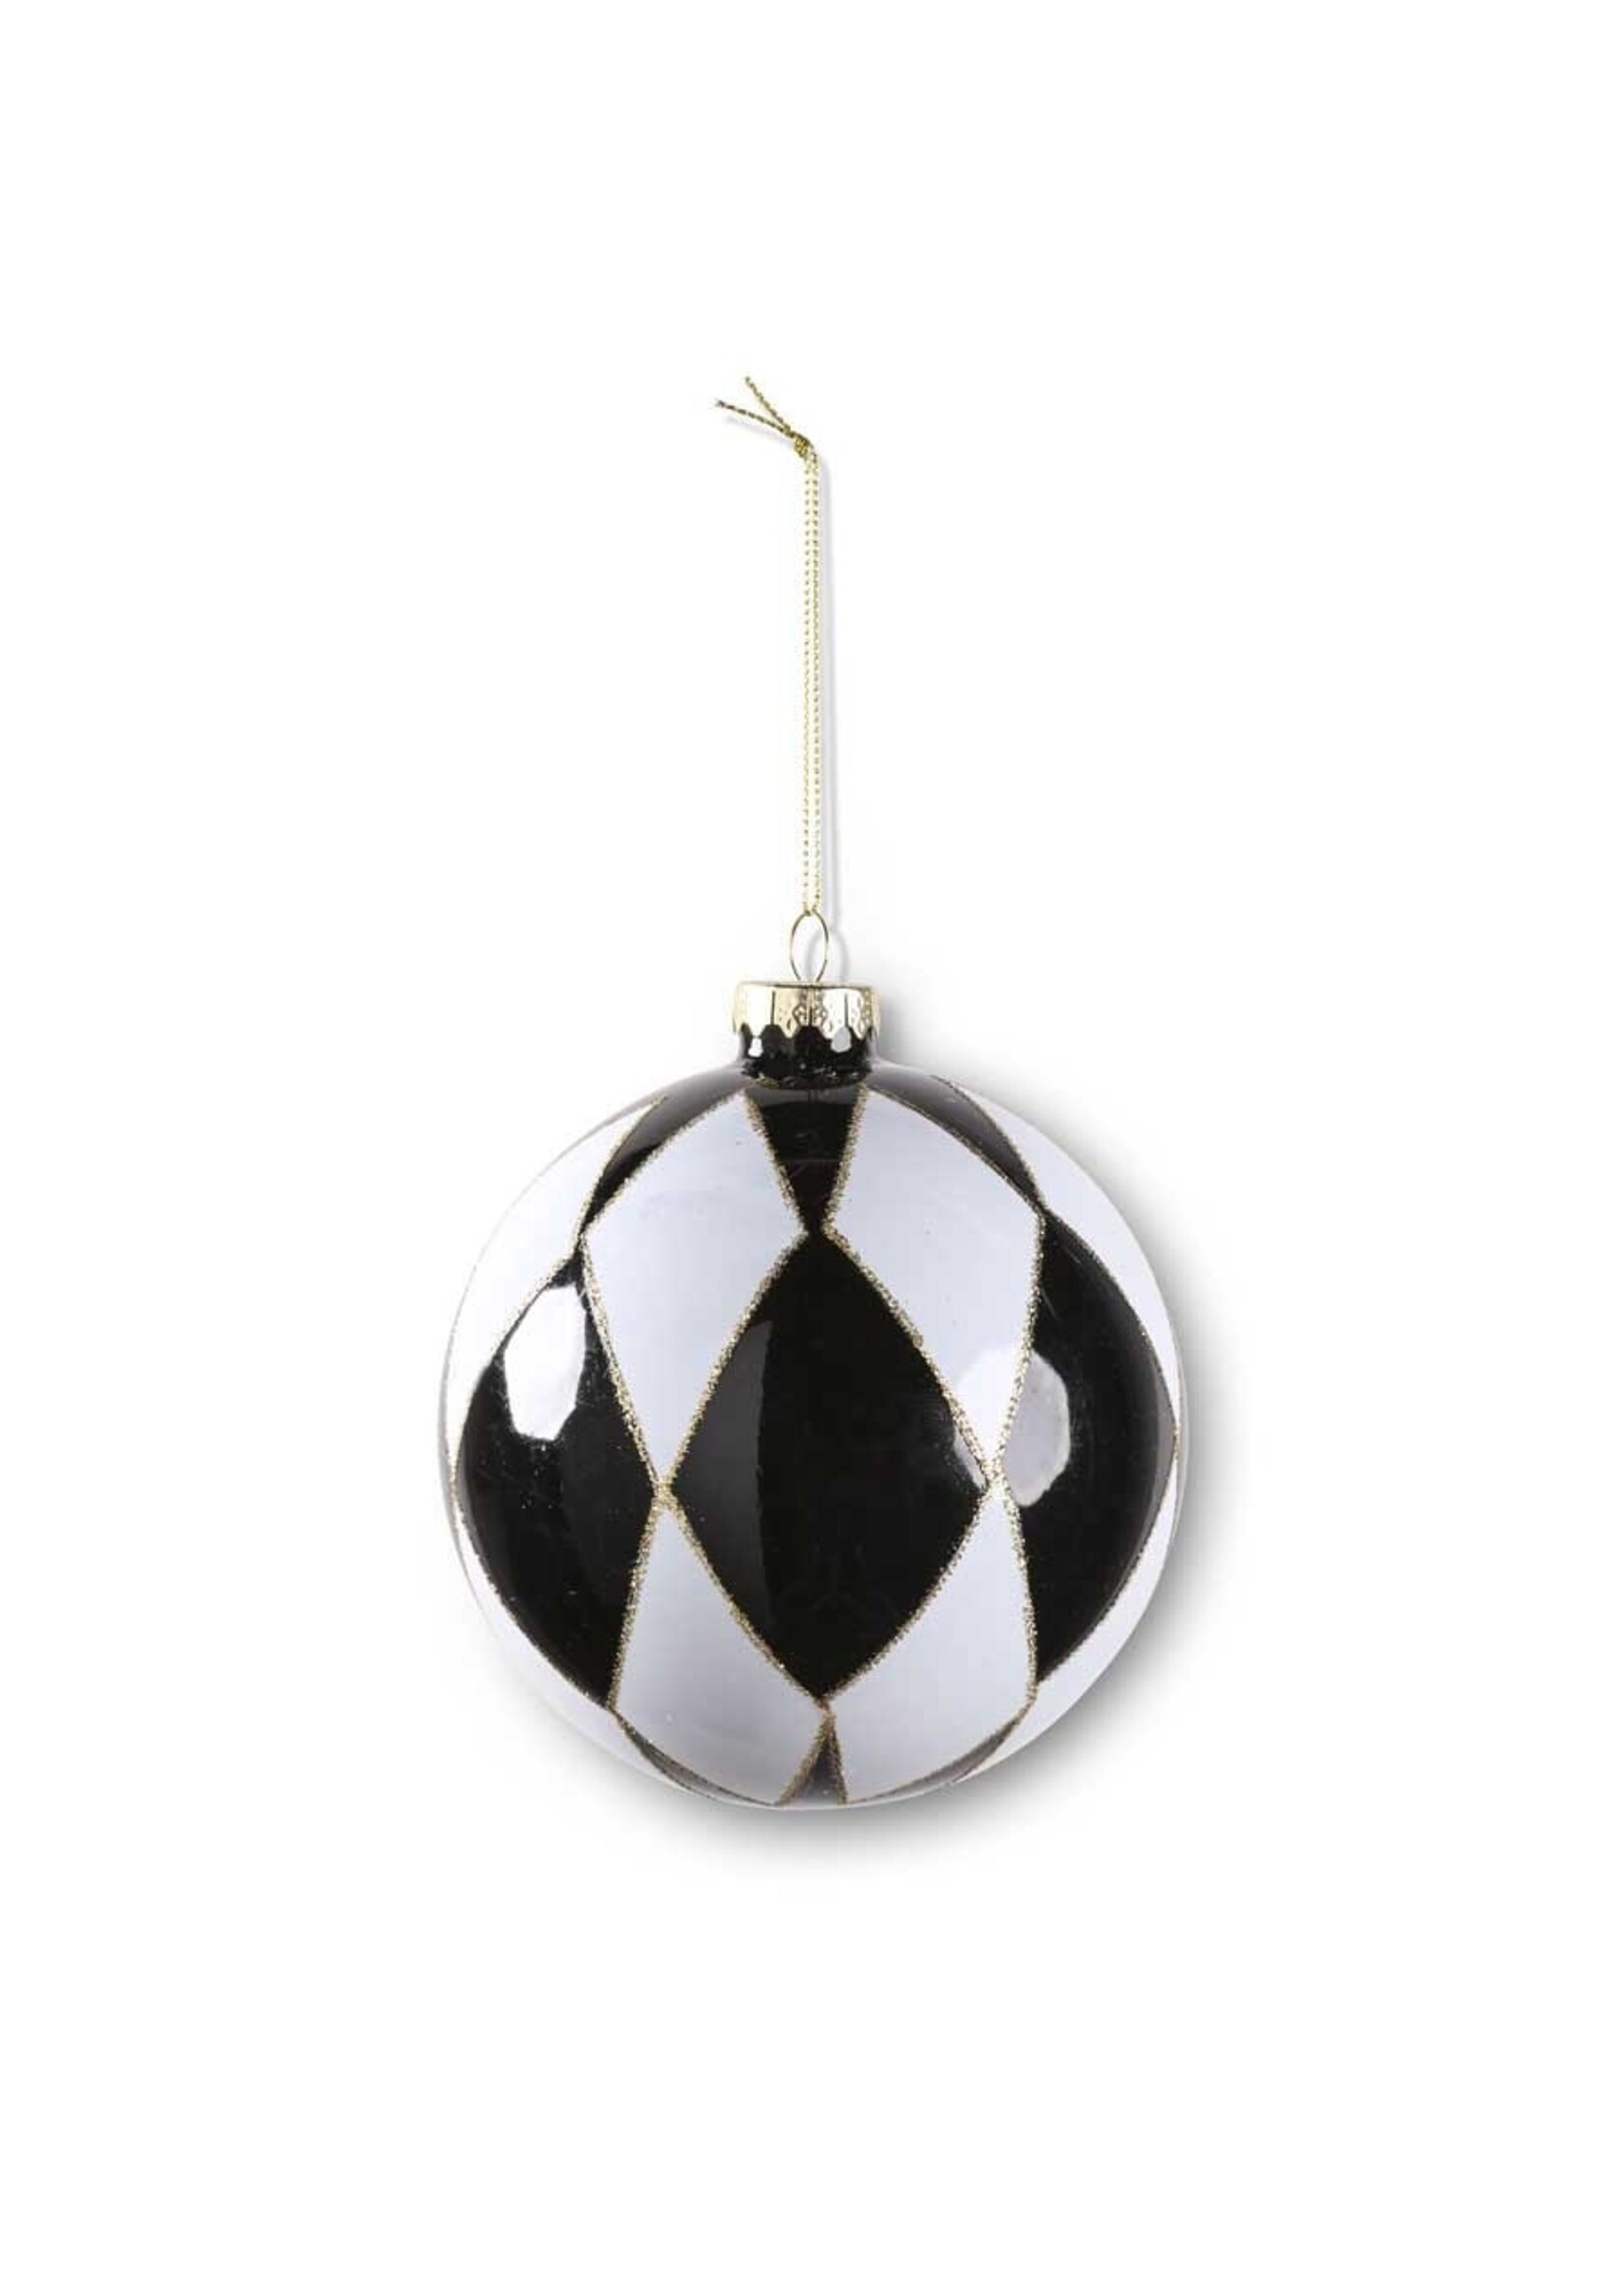 4.5 inch Round Black and White Harlequin Ornament